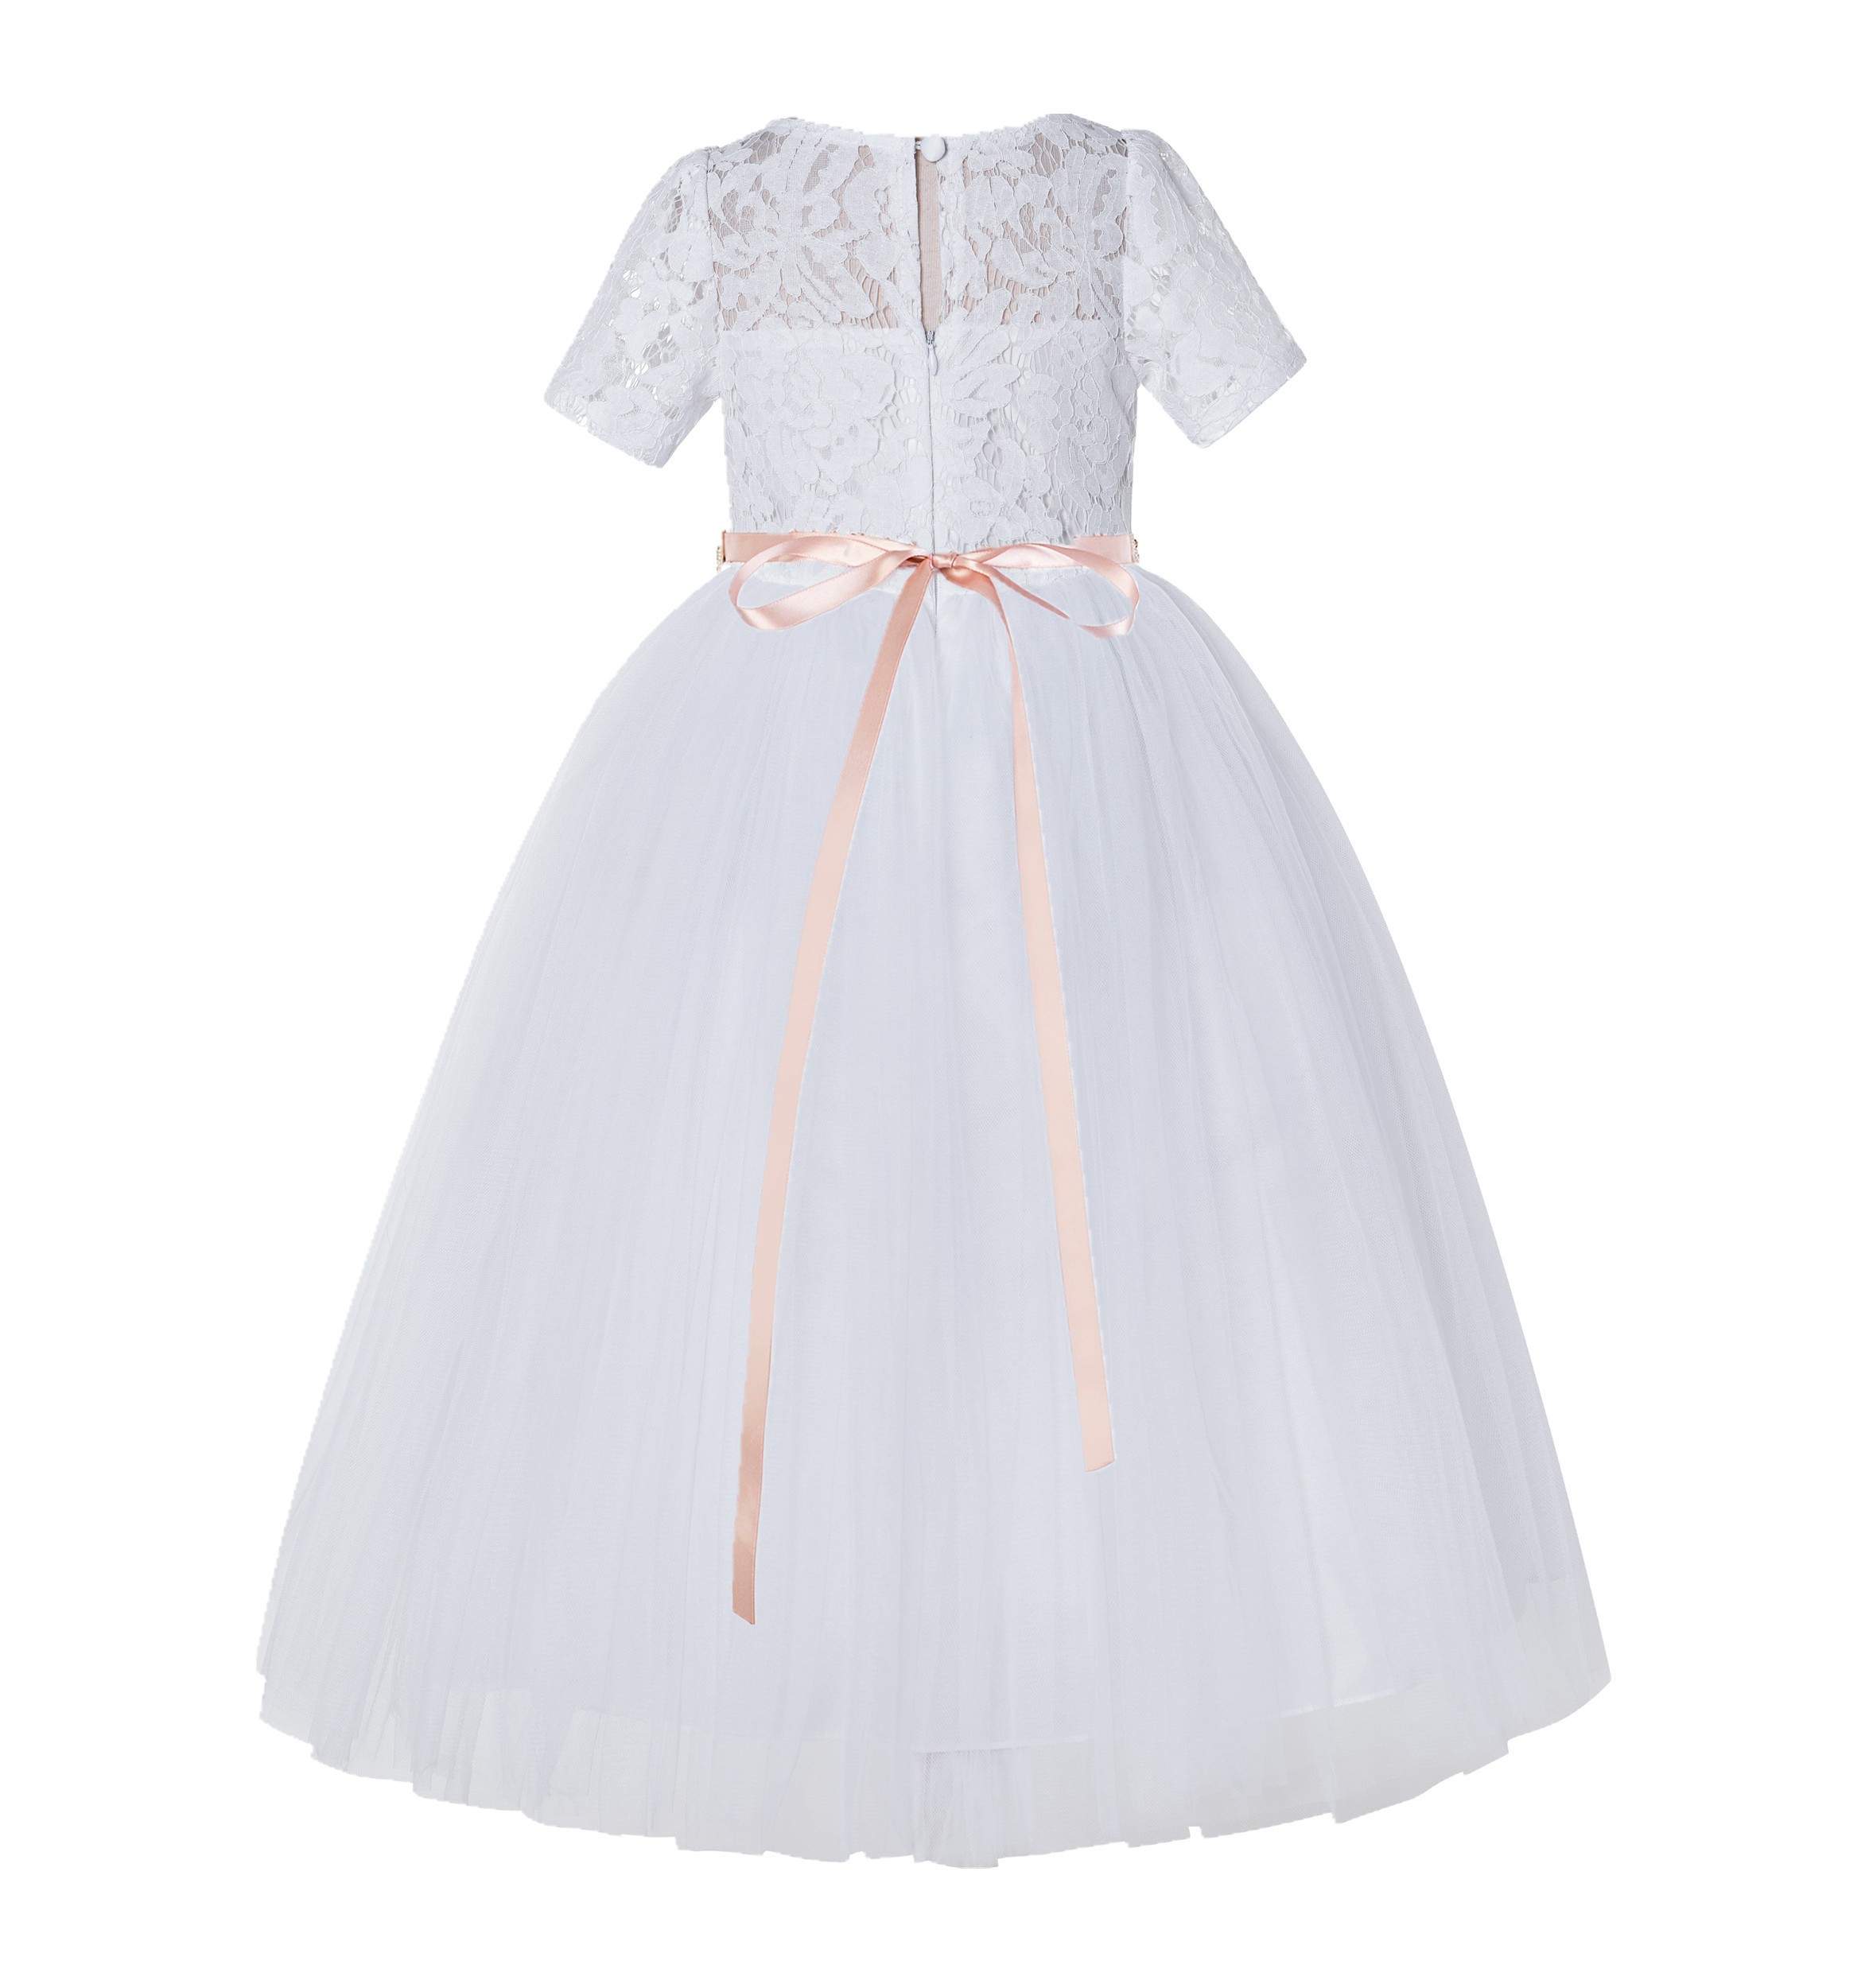 White / Blush Pink Floral Lace Flower Girl Dress Vintage Dress LG2